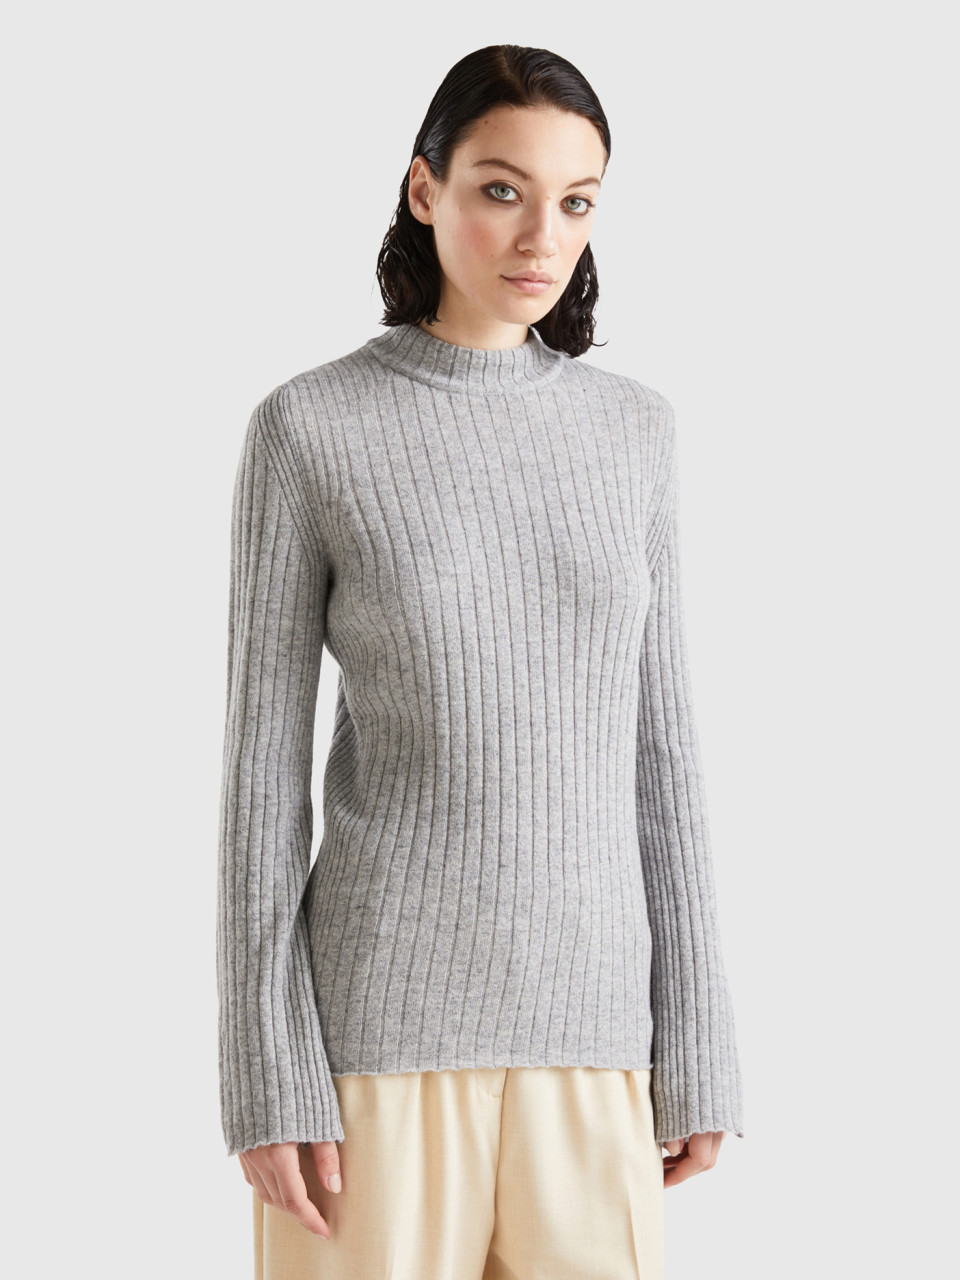 Benetton, Turtleneck Sweater With Slits, Light Gray, Women